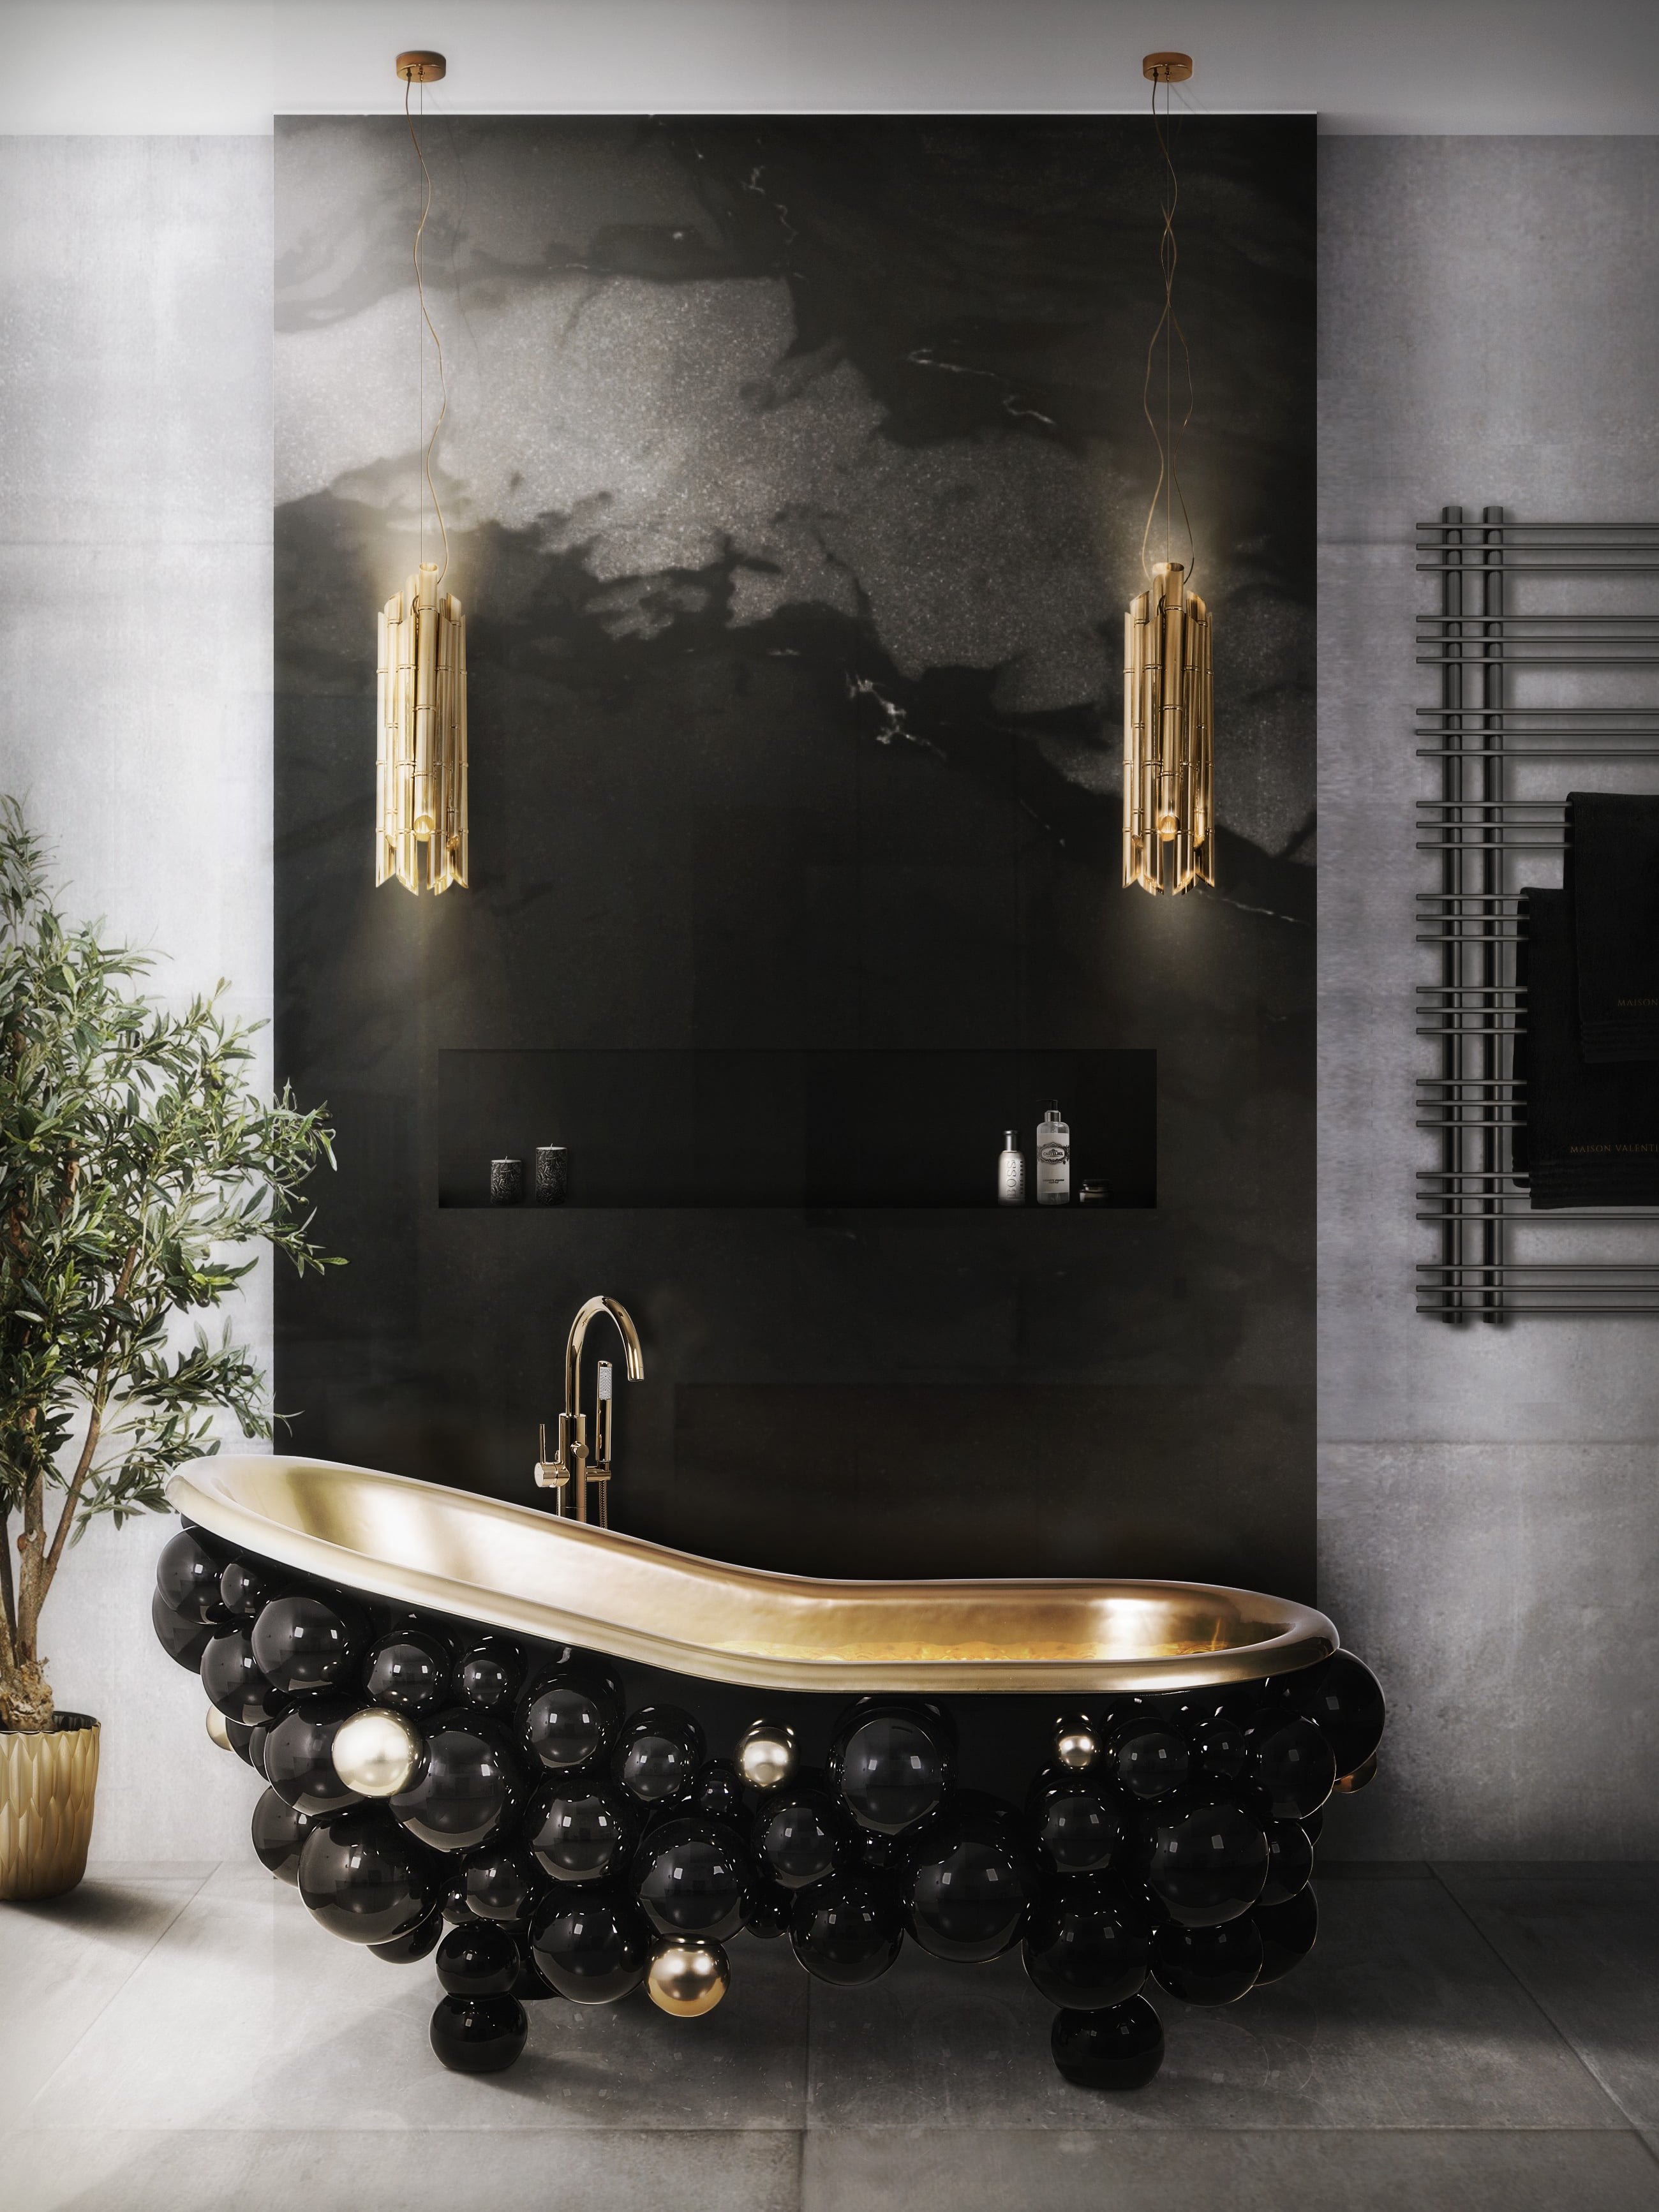 Moody Modern Bathroom Designs With Unique Bubble Bathtub - Home'Society